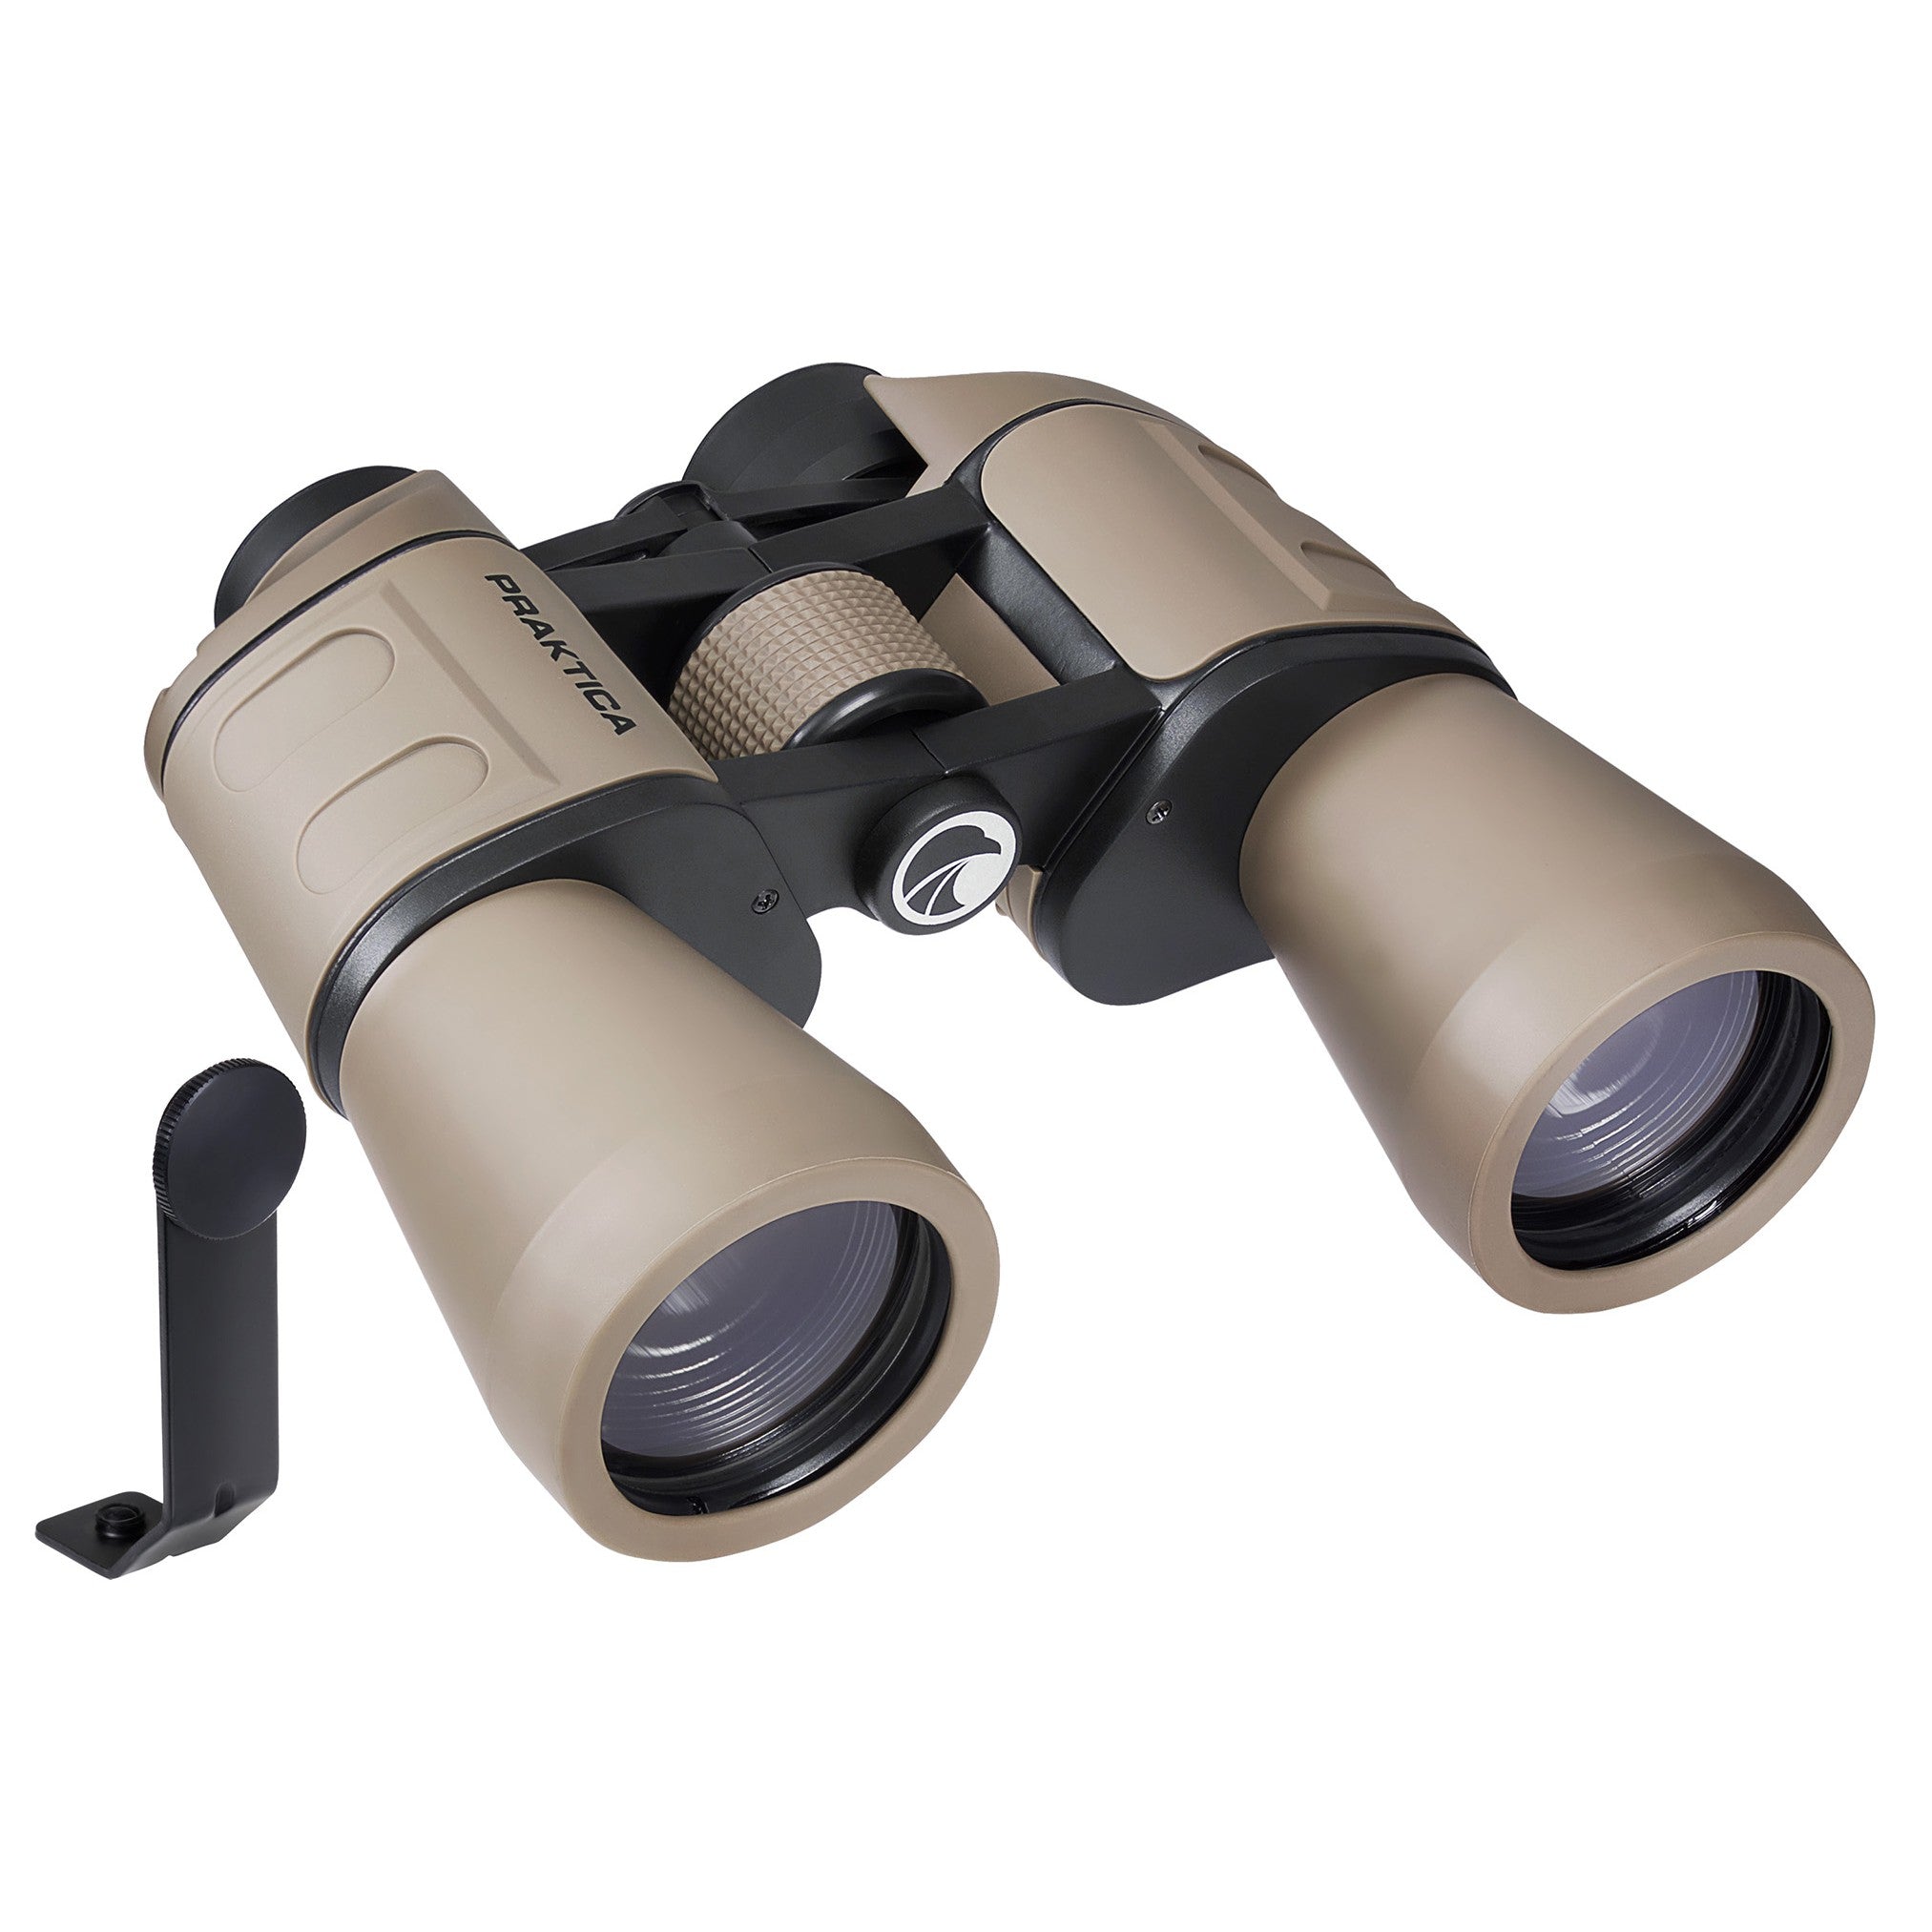 PRAKTICA Falcon 12x50mm Porro Prism Field Binoculars - Sand (Binoculars + Tripod Mount)